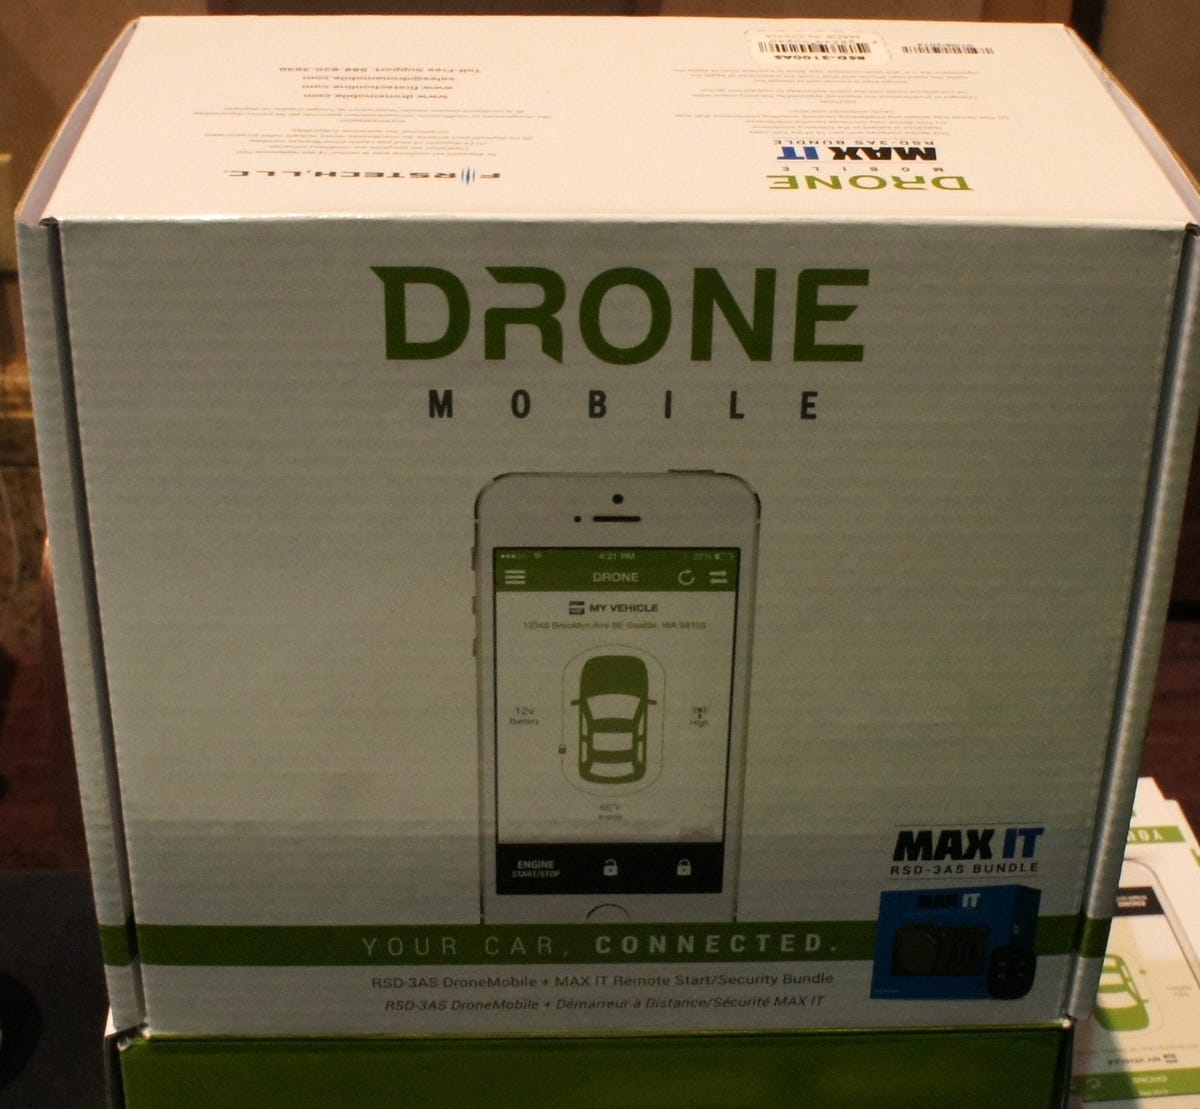 Drone Mobile kit